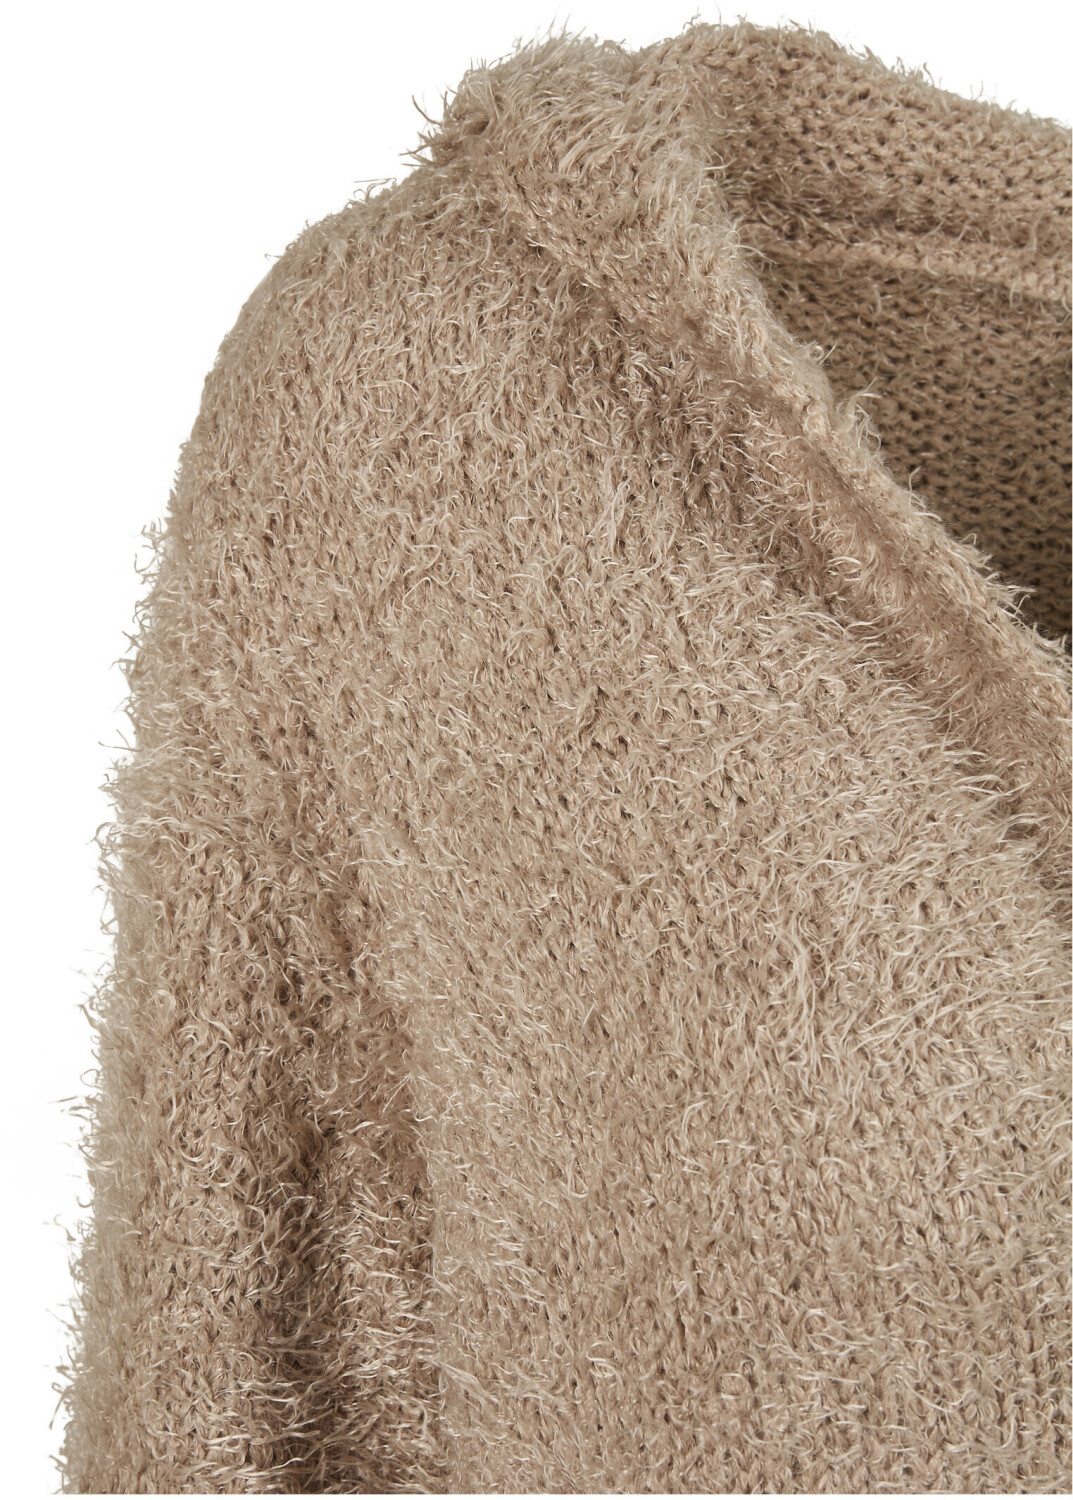 Urban Classics Ladies Hooded Feather Cardigan (TB1750-03257-0037) softtaupe  ab 29,59 € | Preisvergleich bei